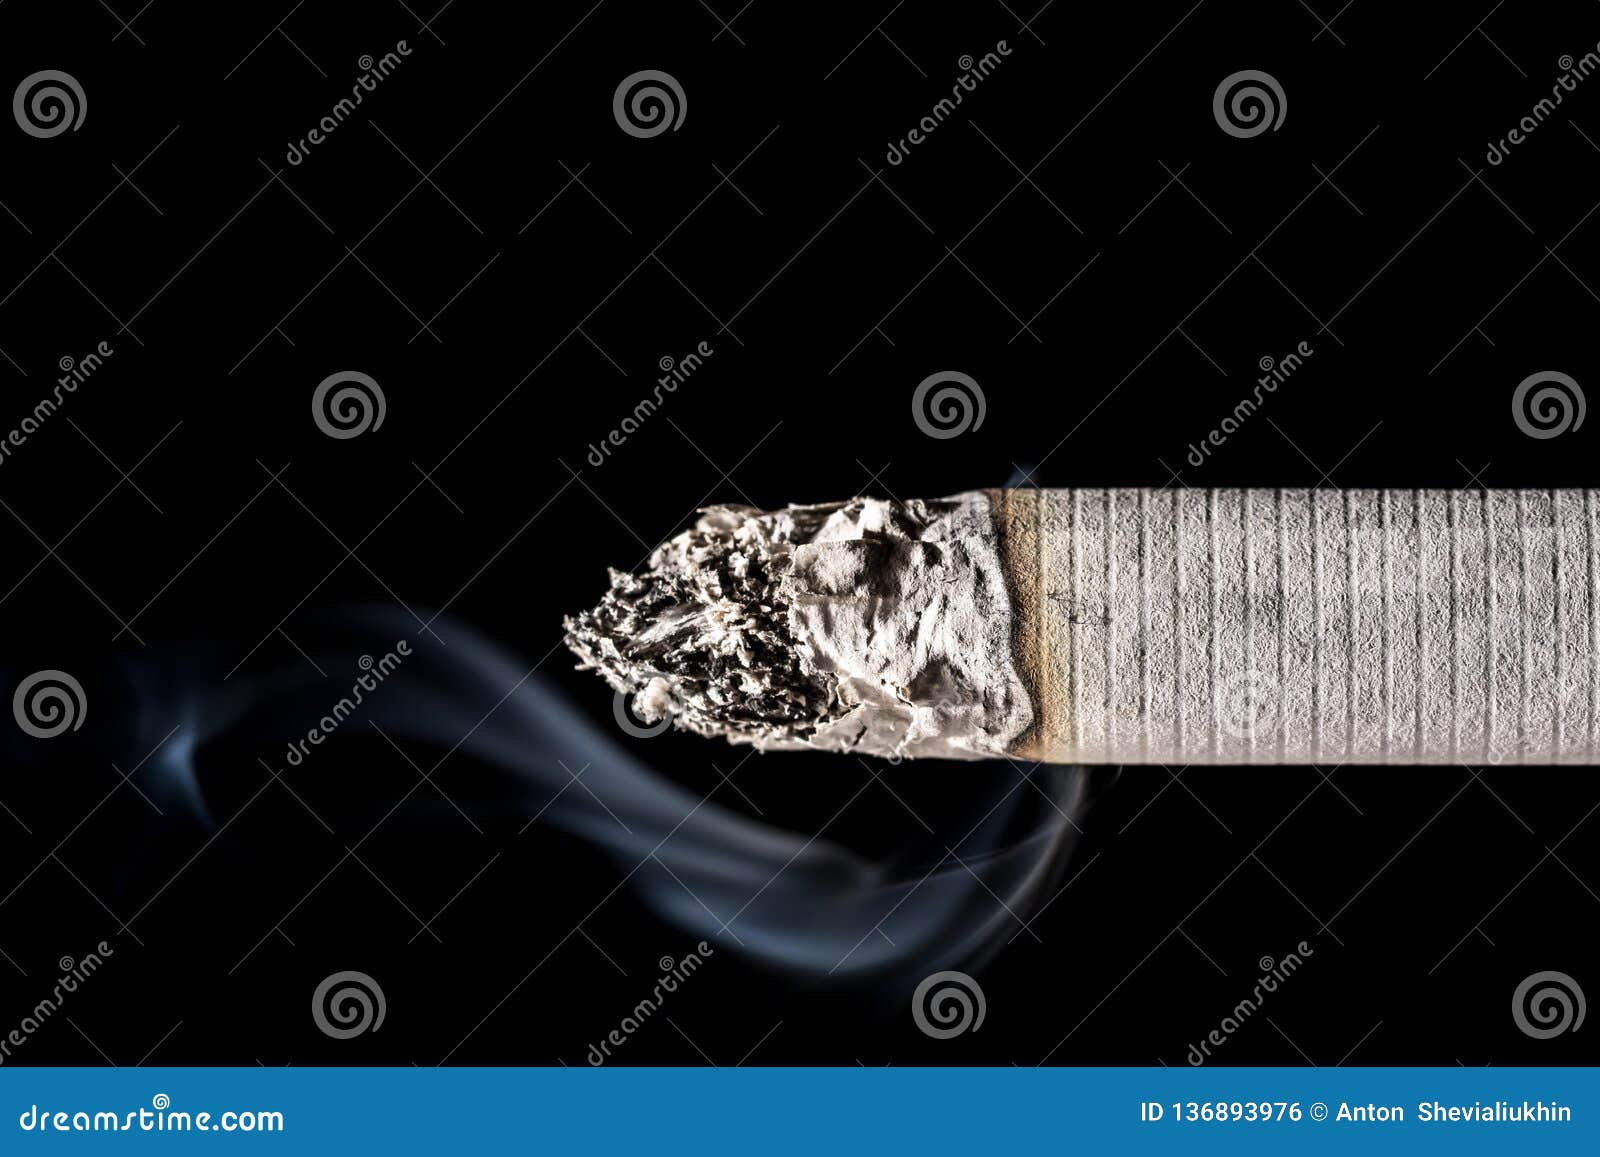 Burning Smoldering Smoking Cigarette Close-up with Beautiful Smoke ...